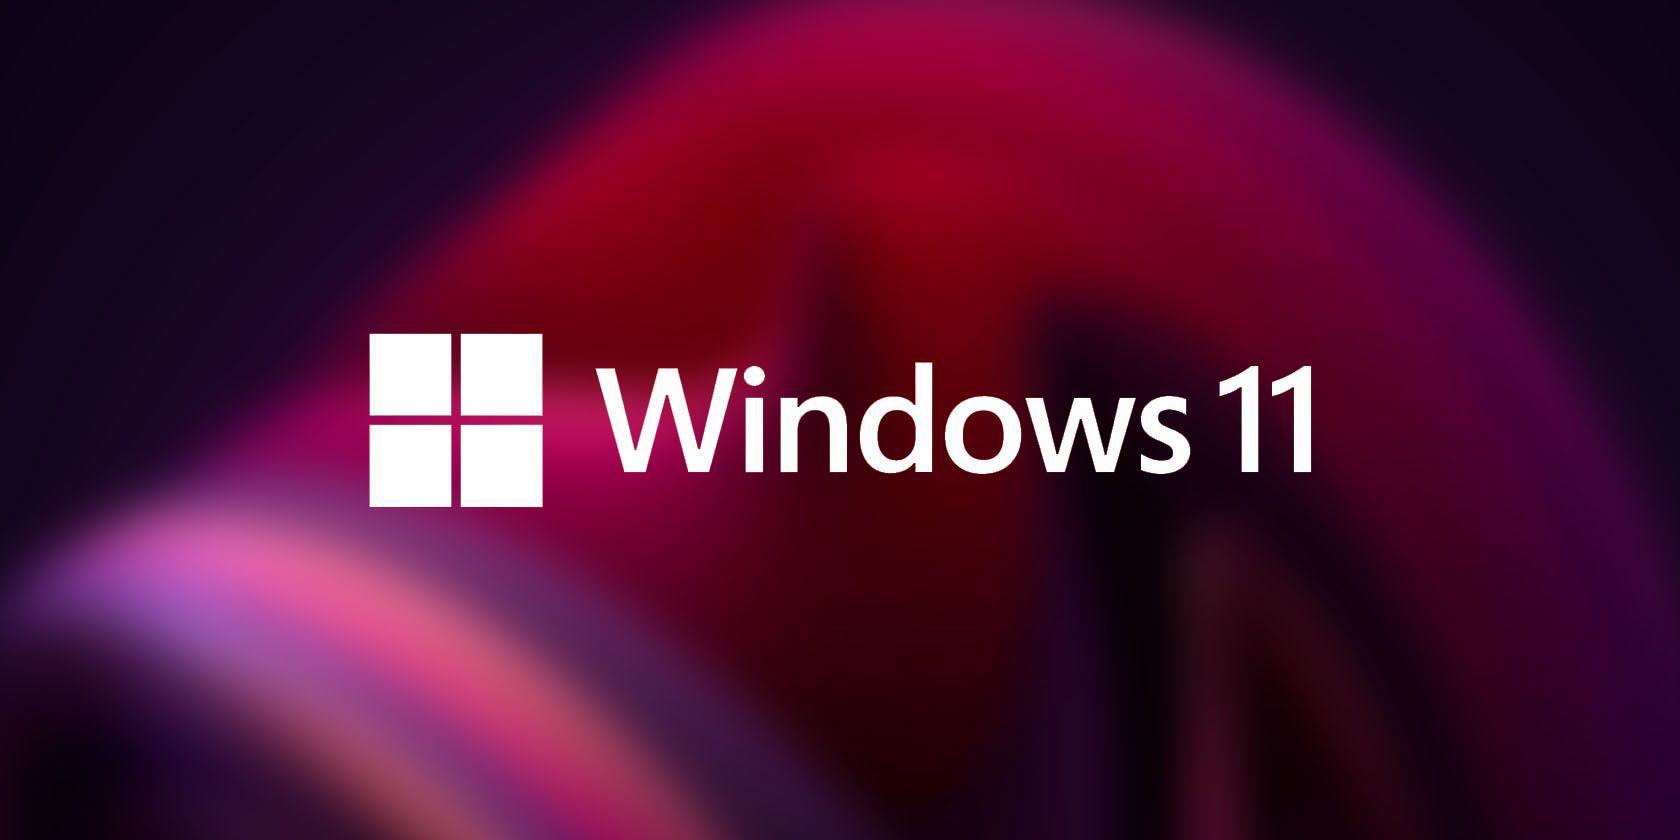 The Windows 11 logo